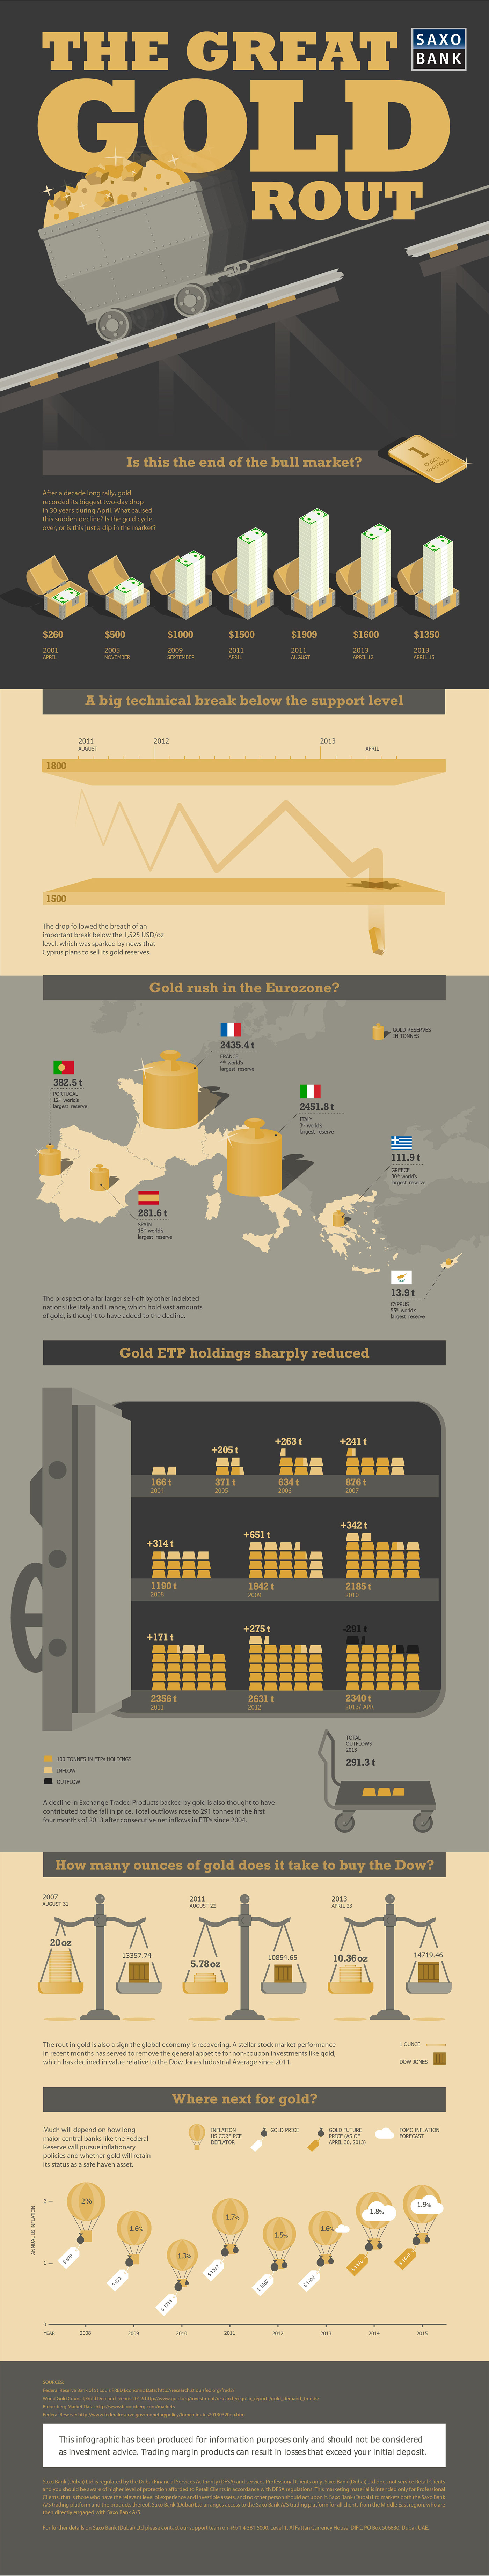 infographic brokerage investment bank Online Trading Platform DIFC dubai Turkey UAE